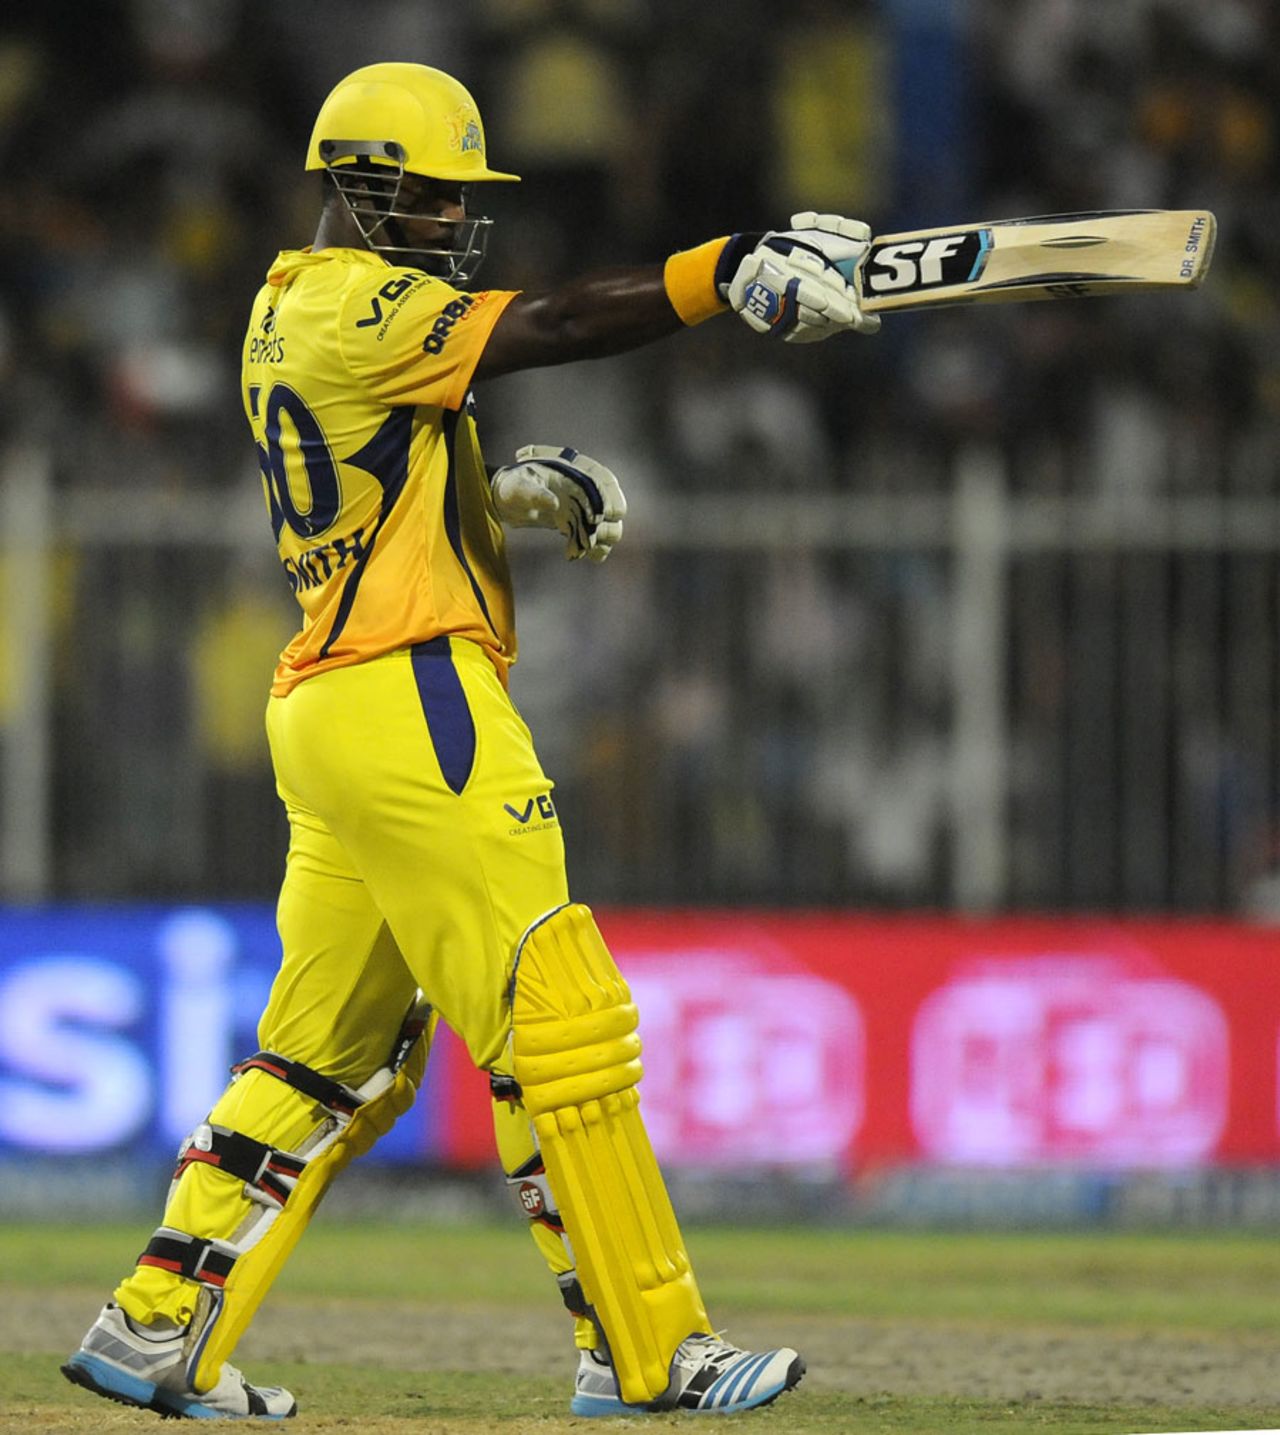 Dwayne Smith signals his half-century, Sunrisers Hyderabad v Chennai Super Kings, IPL 2014, Sharjah, April 27, 2014